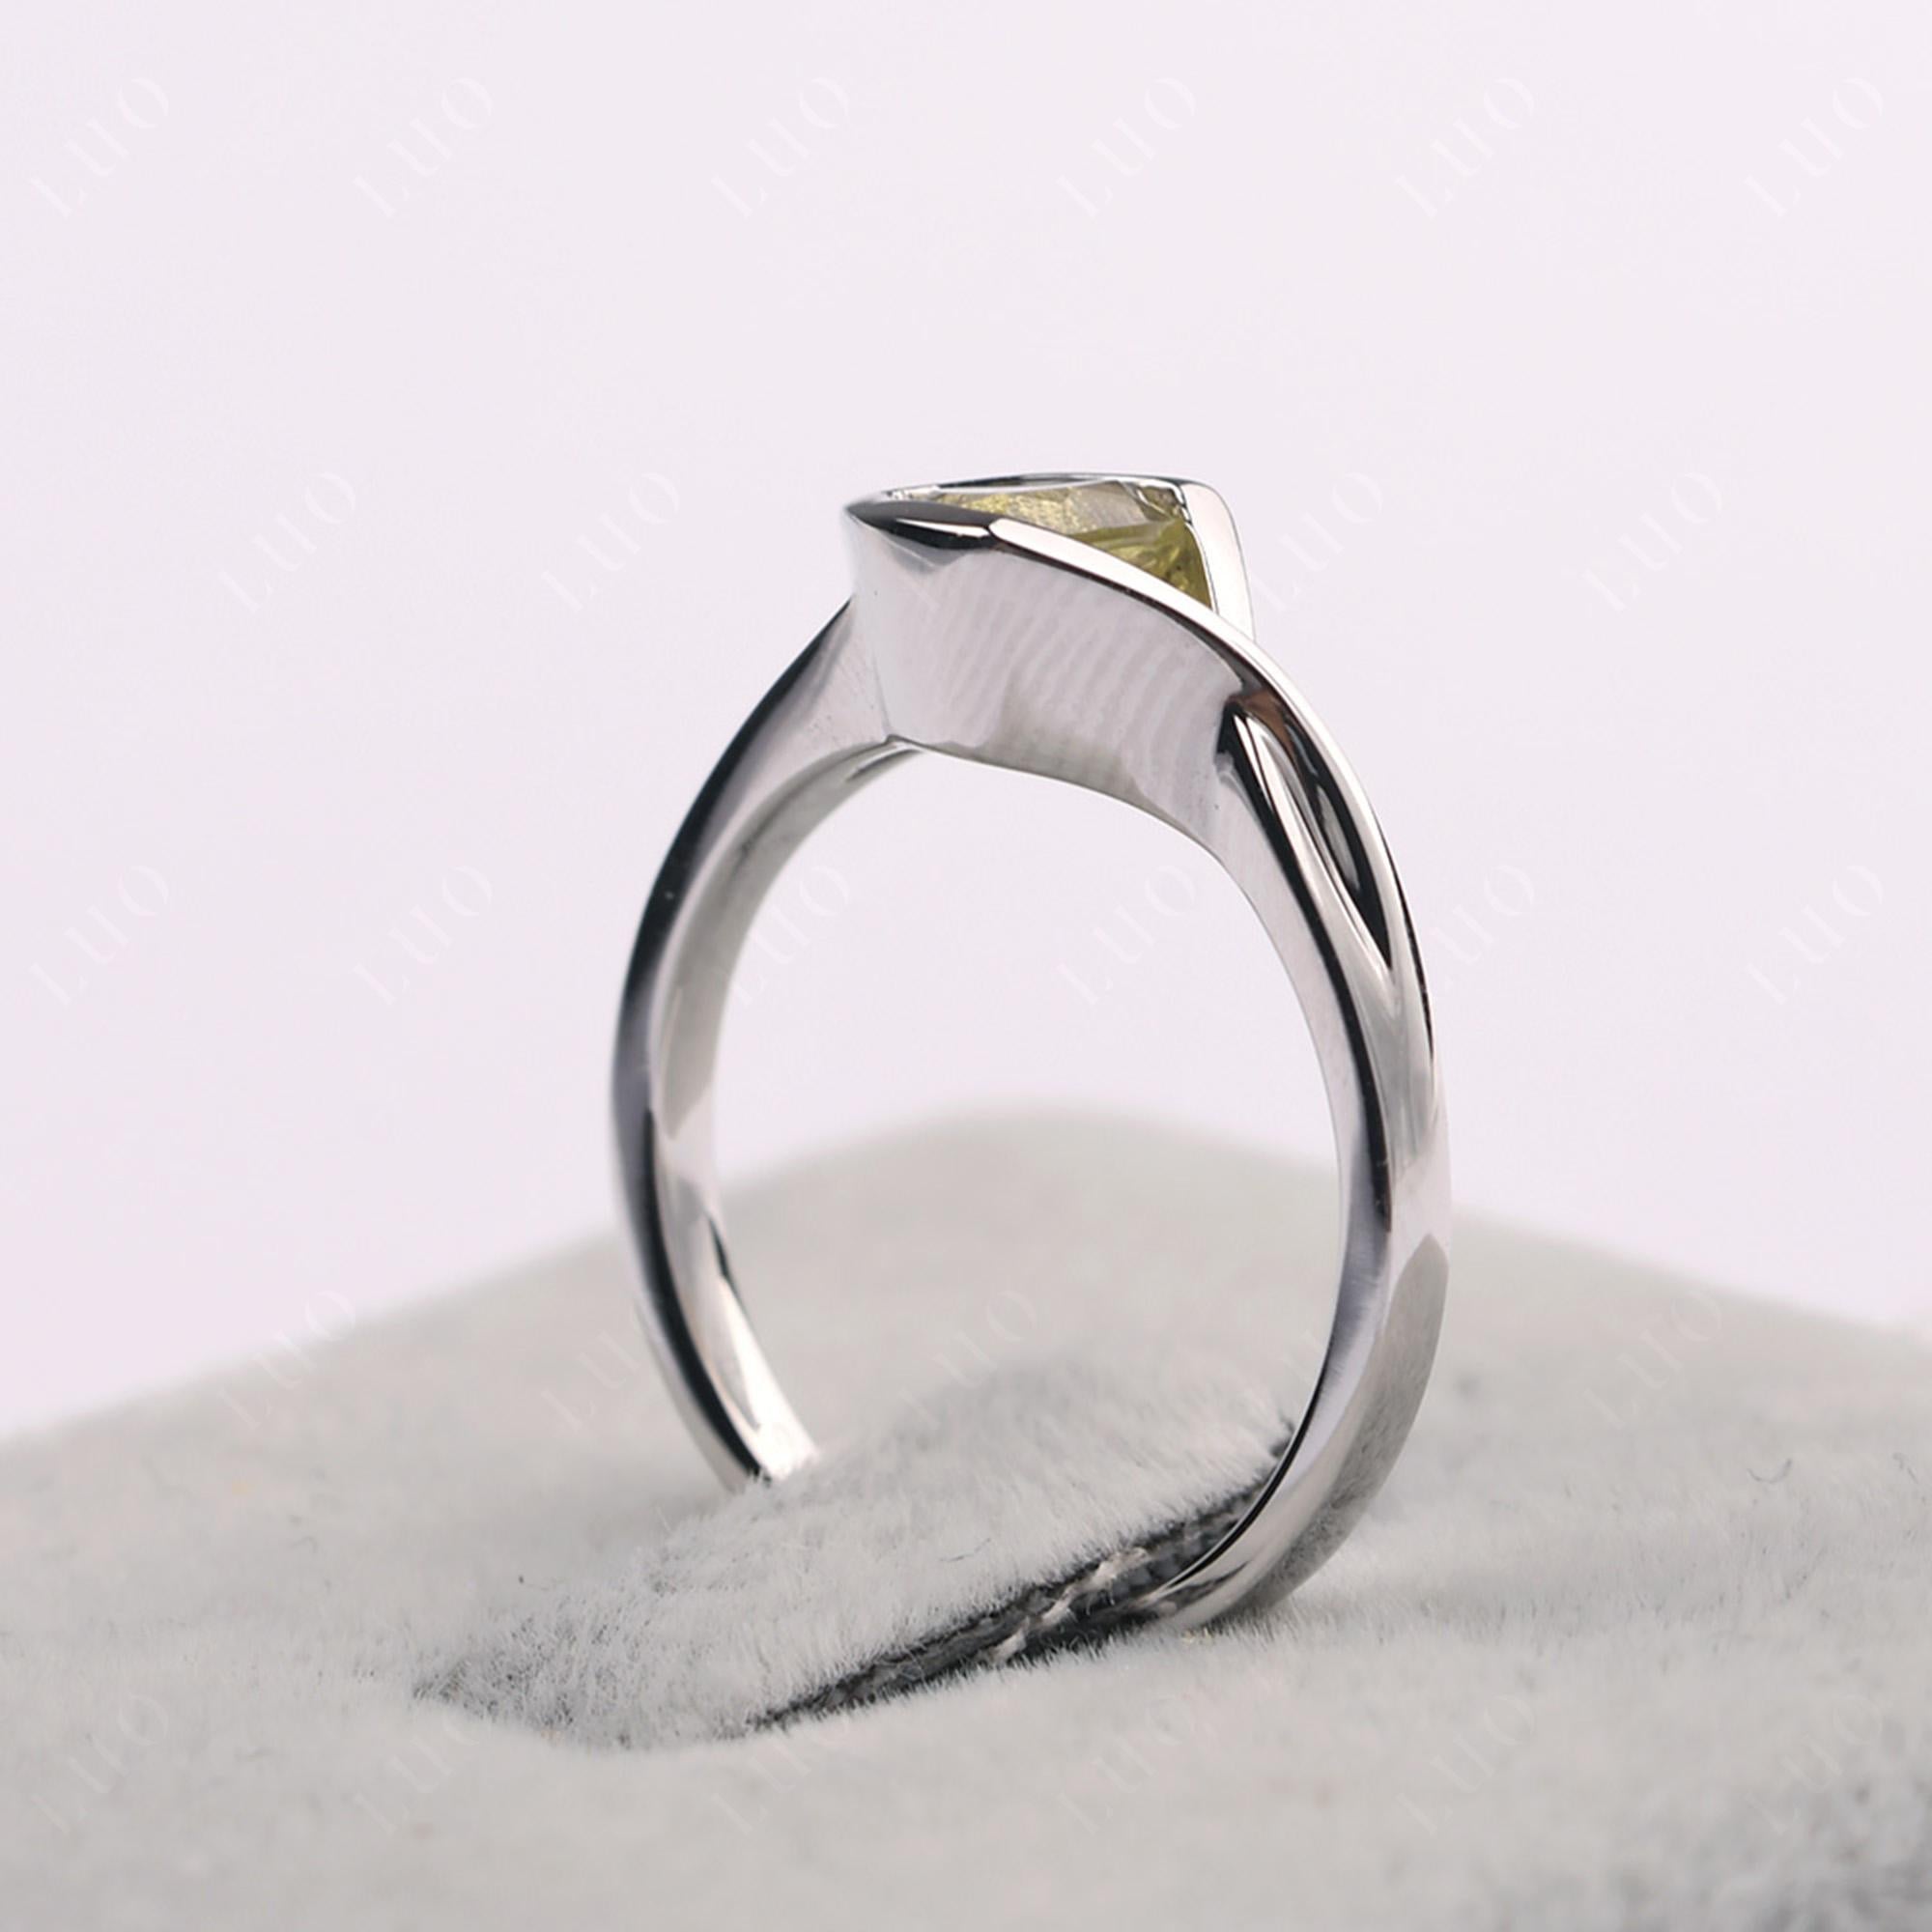 Trillion Cut Simple Lemon Quartz Ring - LUO Jewelry